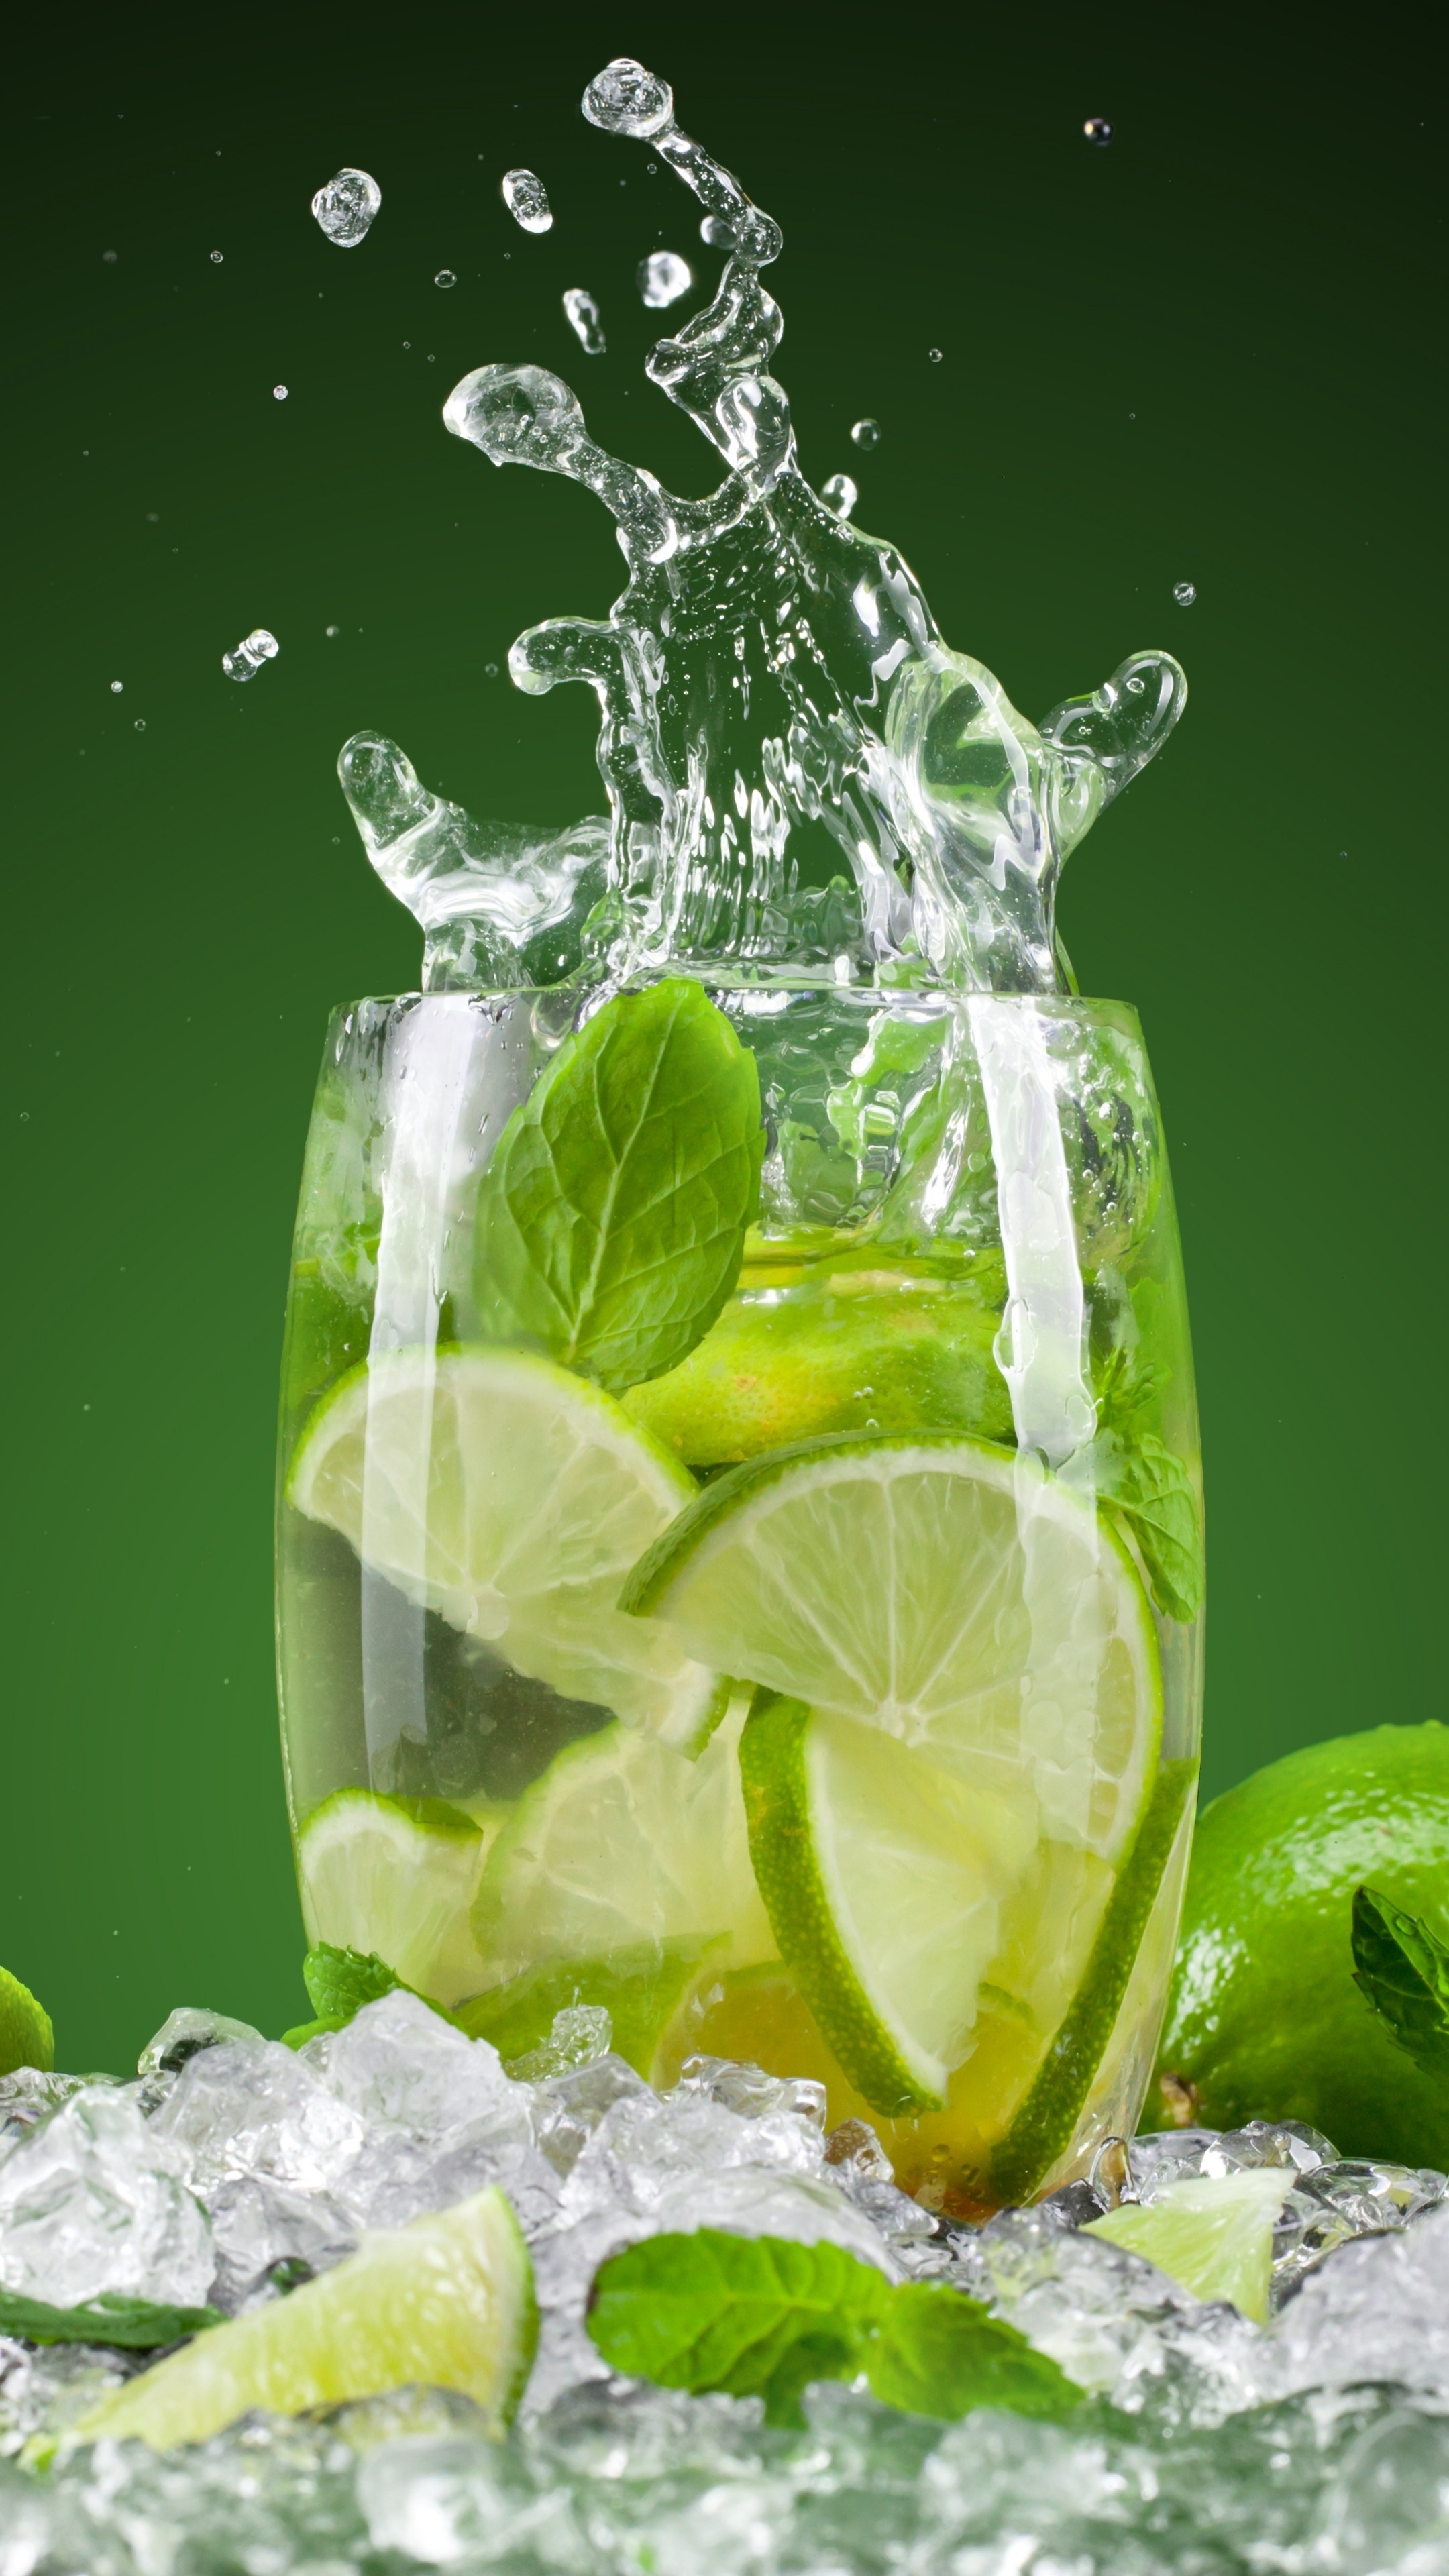 Lemonade: Cocktails, Lime, Mint, Water, Ice cubes, Drinkware. 2160x3840 4K Wallpaper.